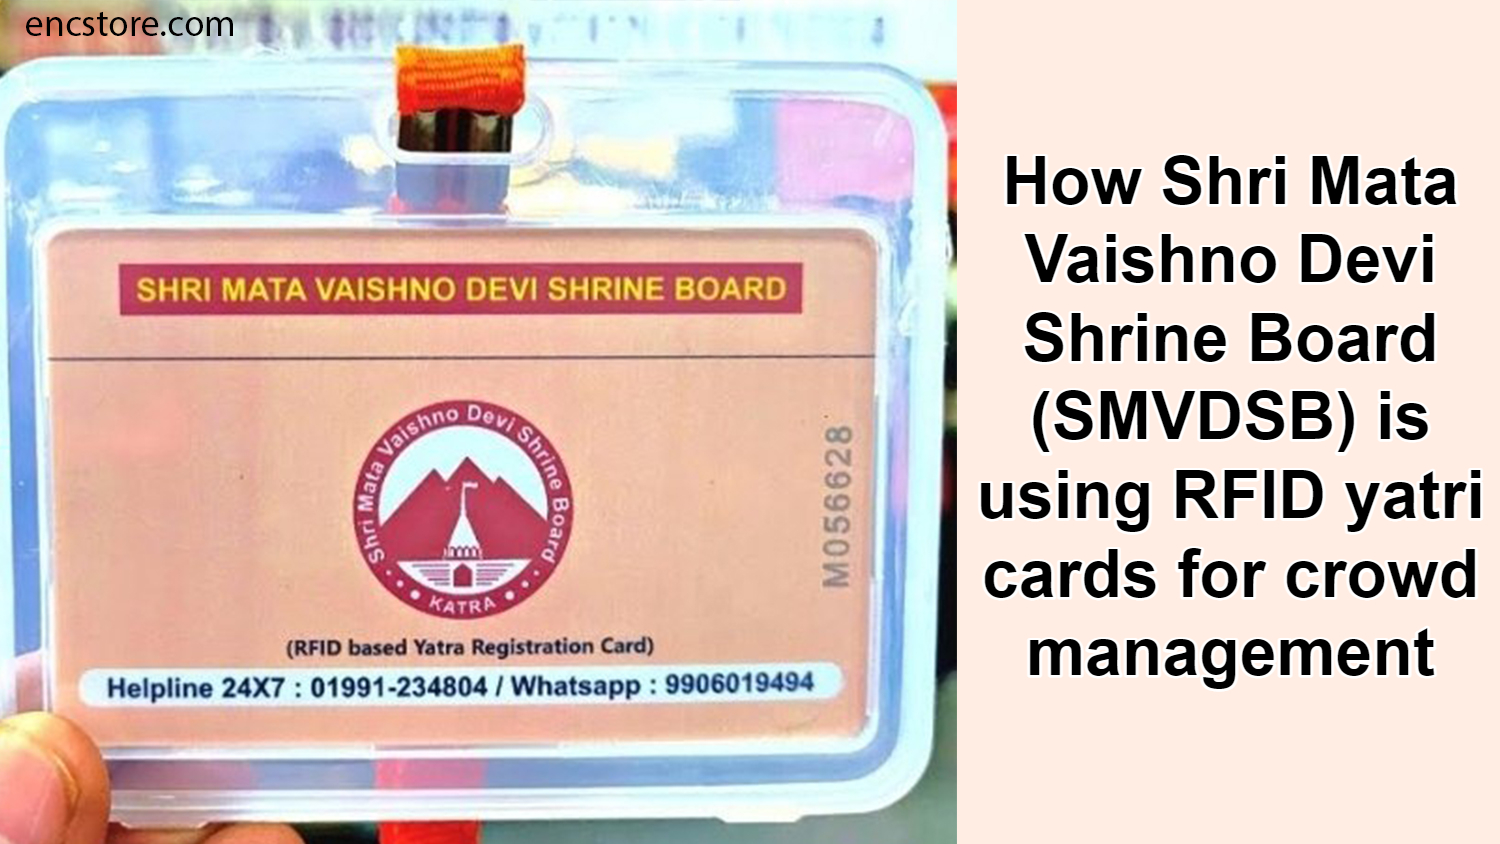 How Shri Mata Vaishno Devi Shrine Board (SMVDSB) is using RFID yatri cards for crowd management